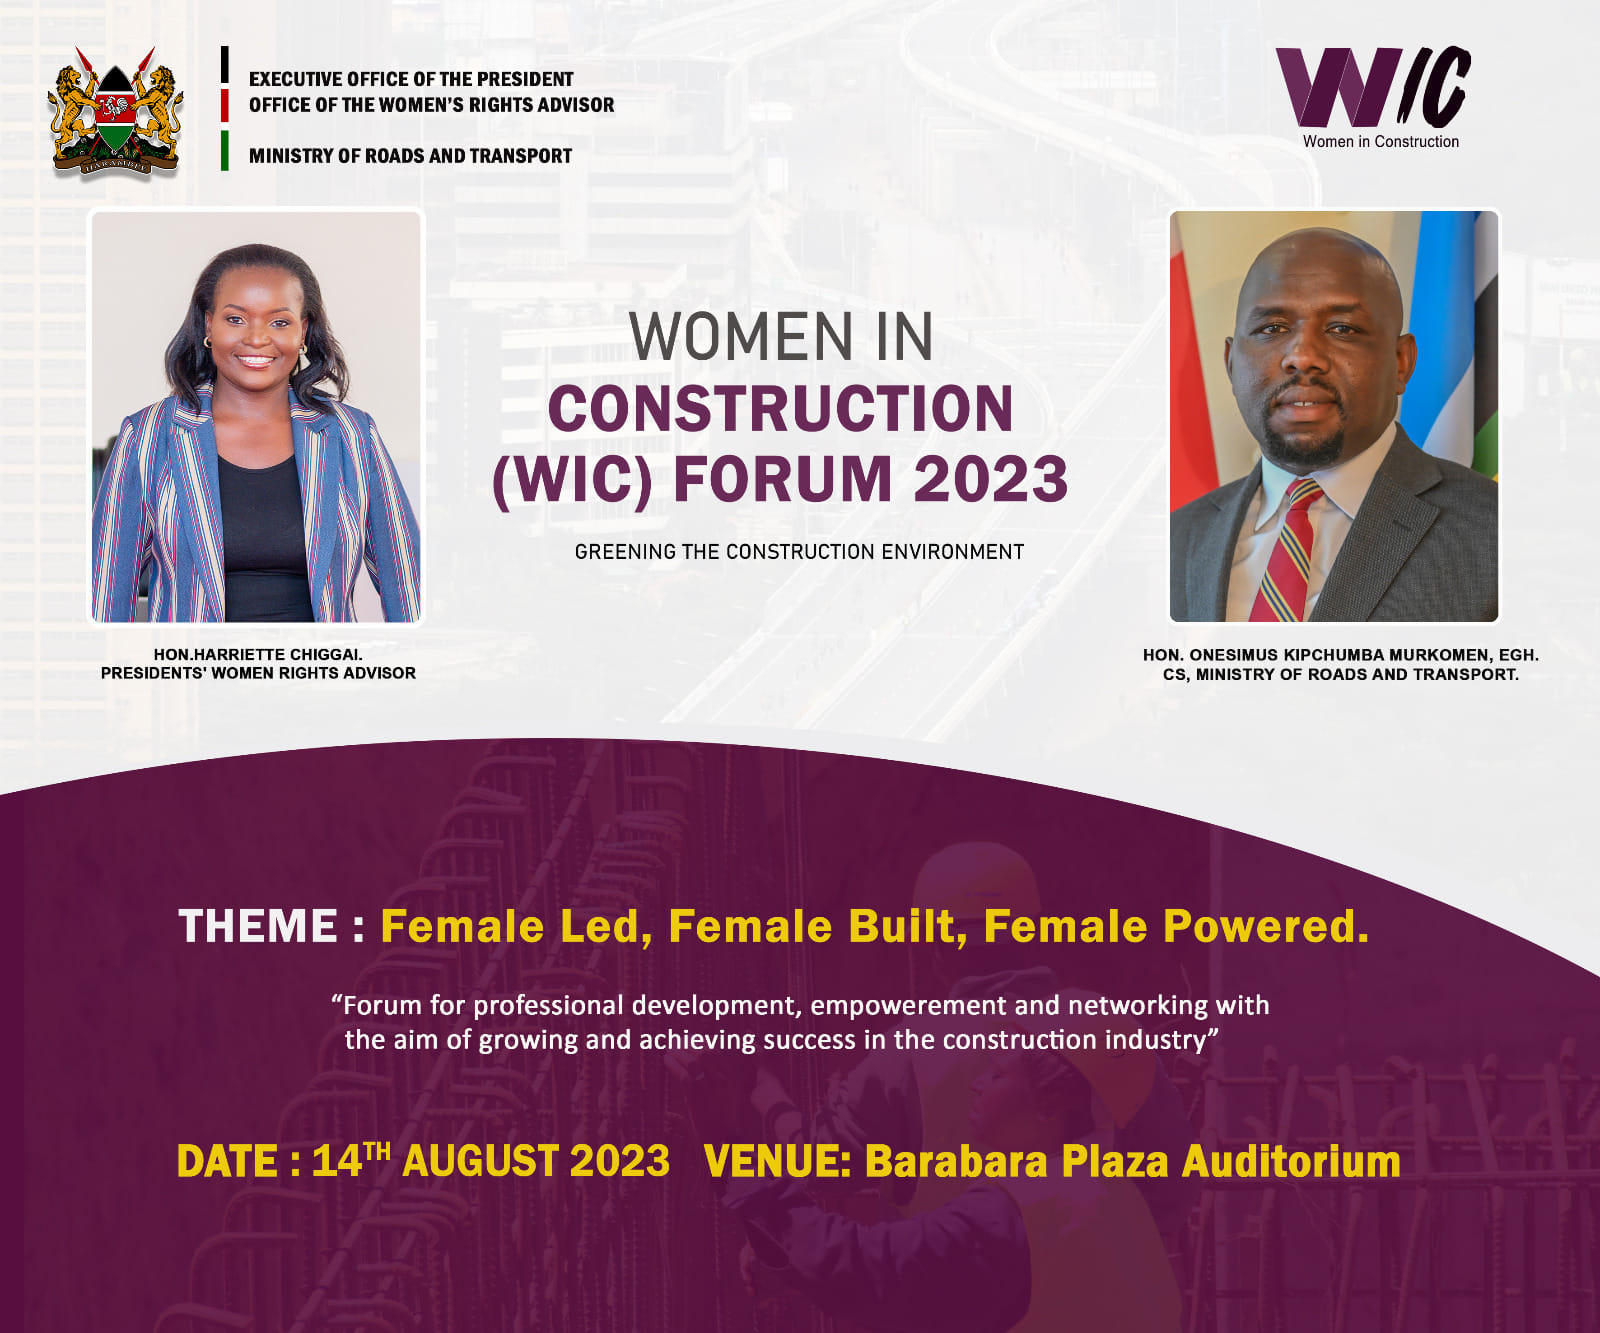 Women in Construction Forum 2023